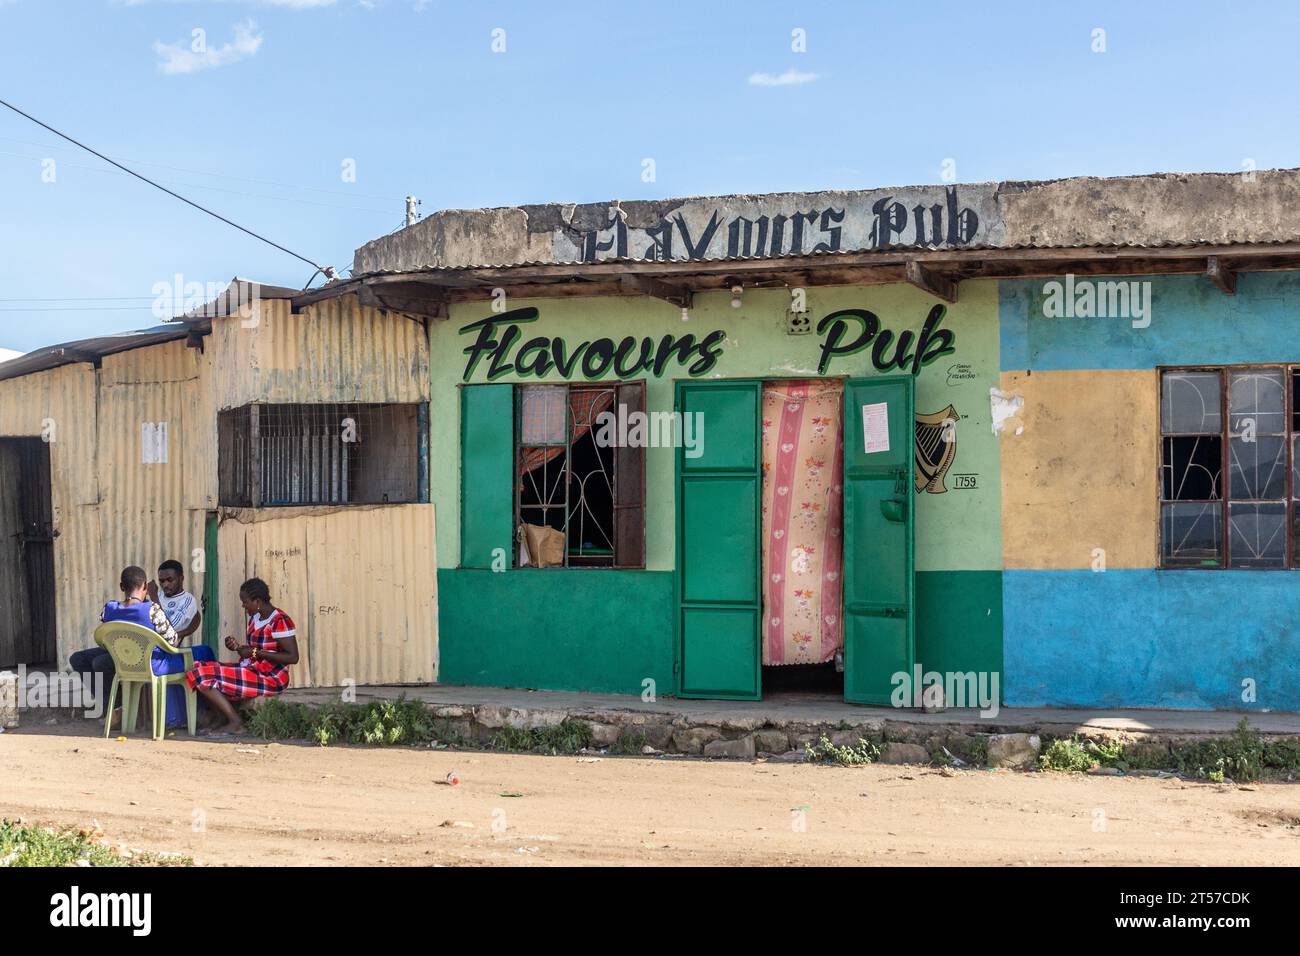 NKOILALE, KENIA - 18. FEBRUAR 2020: Flavours Pub in Nkoilale Village, Kenia Stockfoto